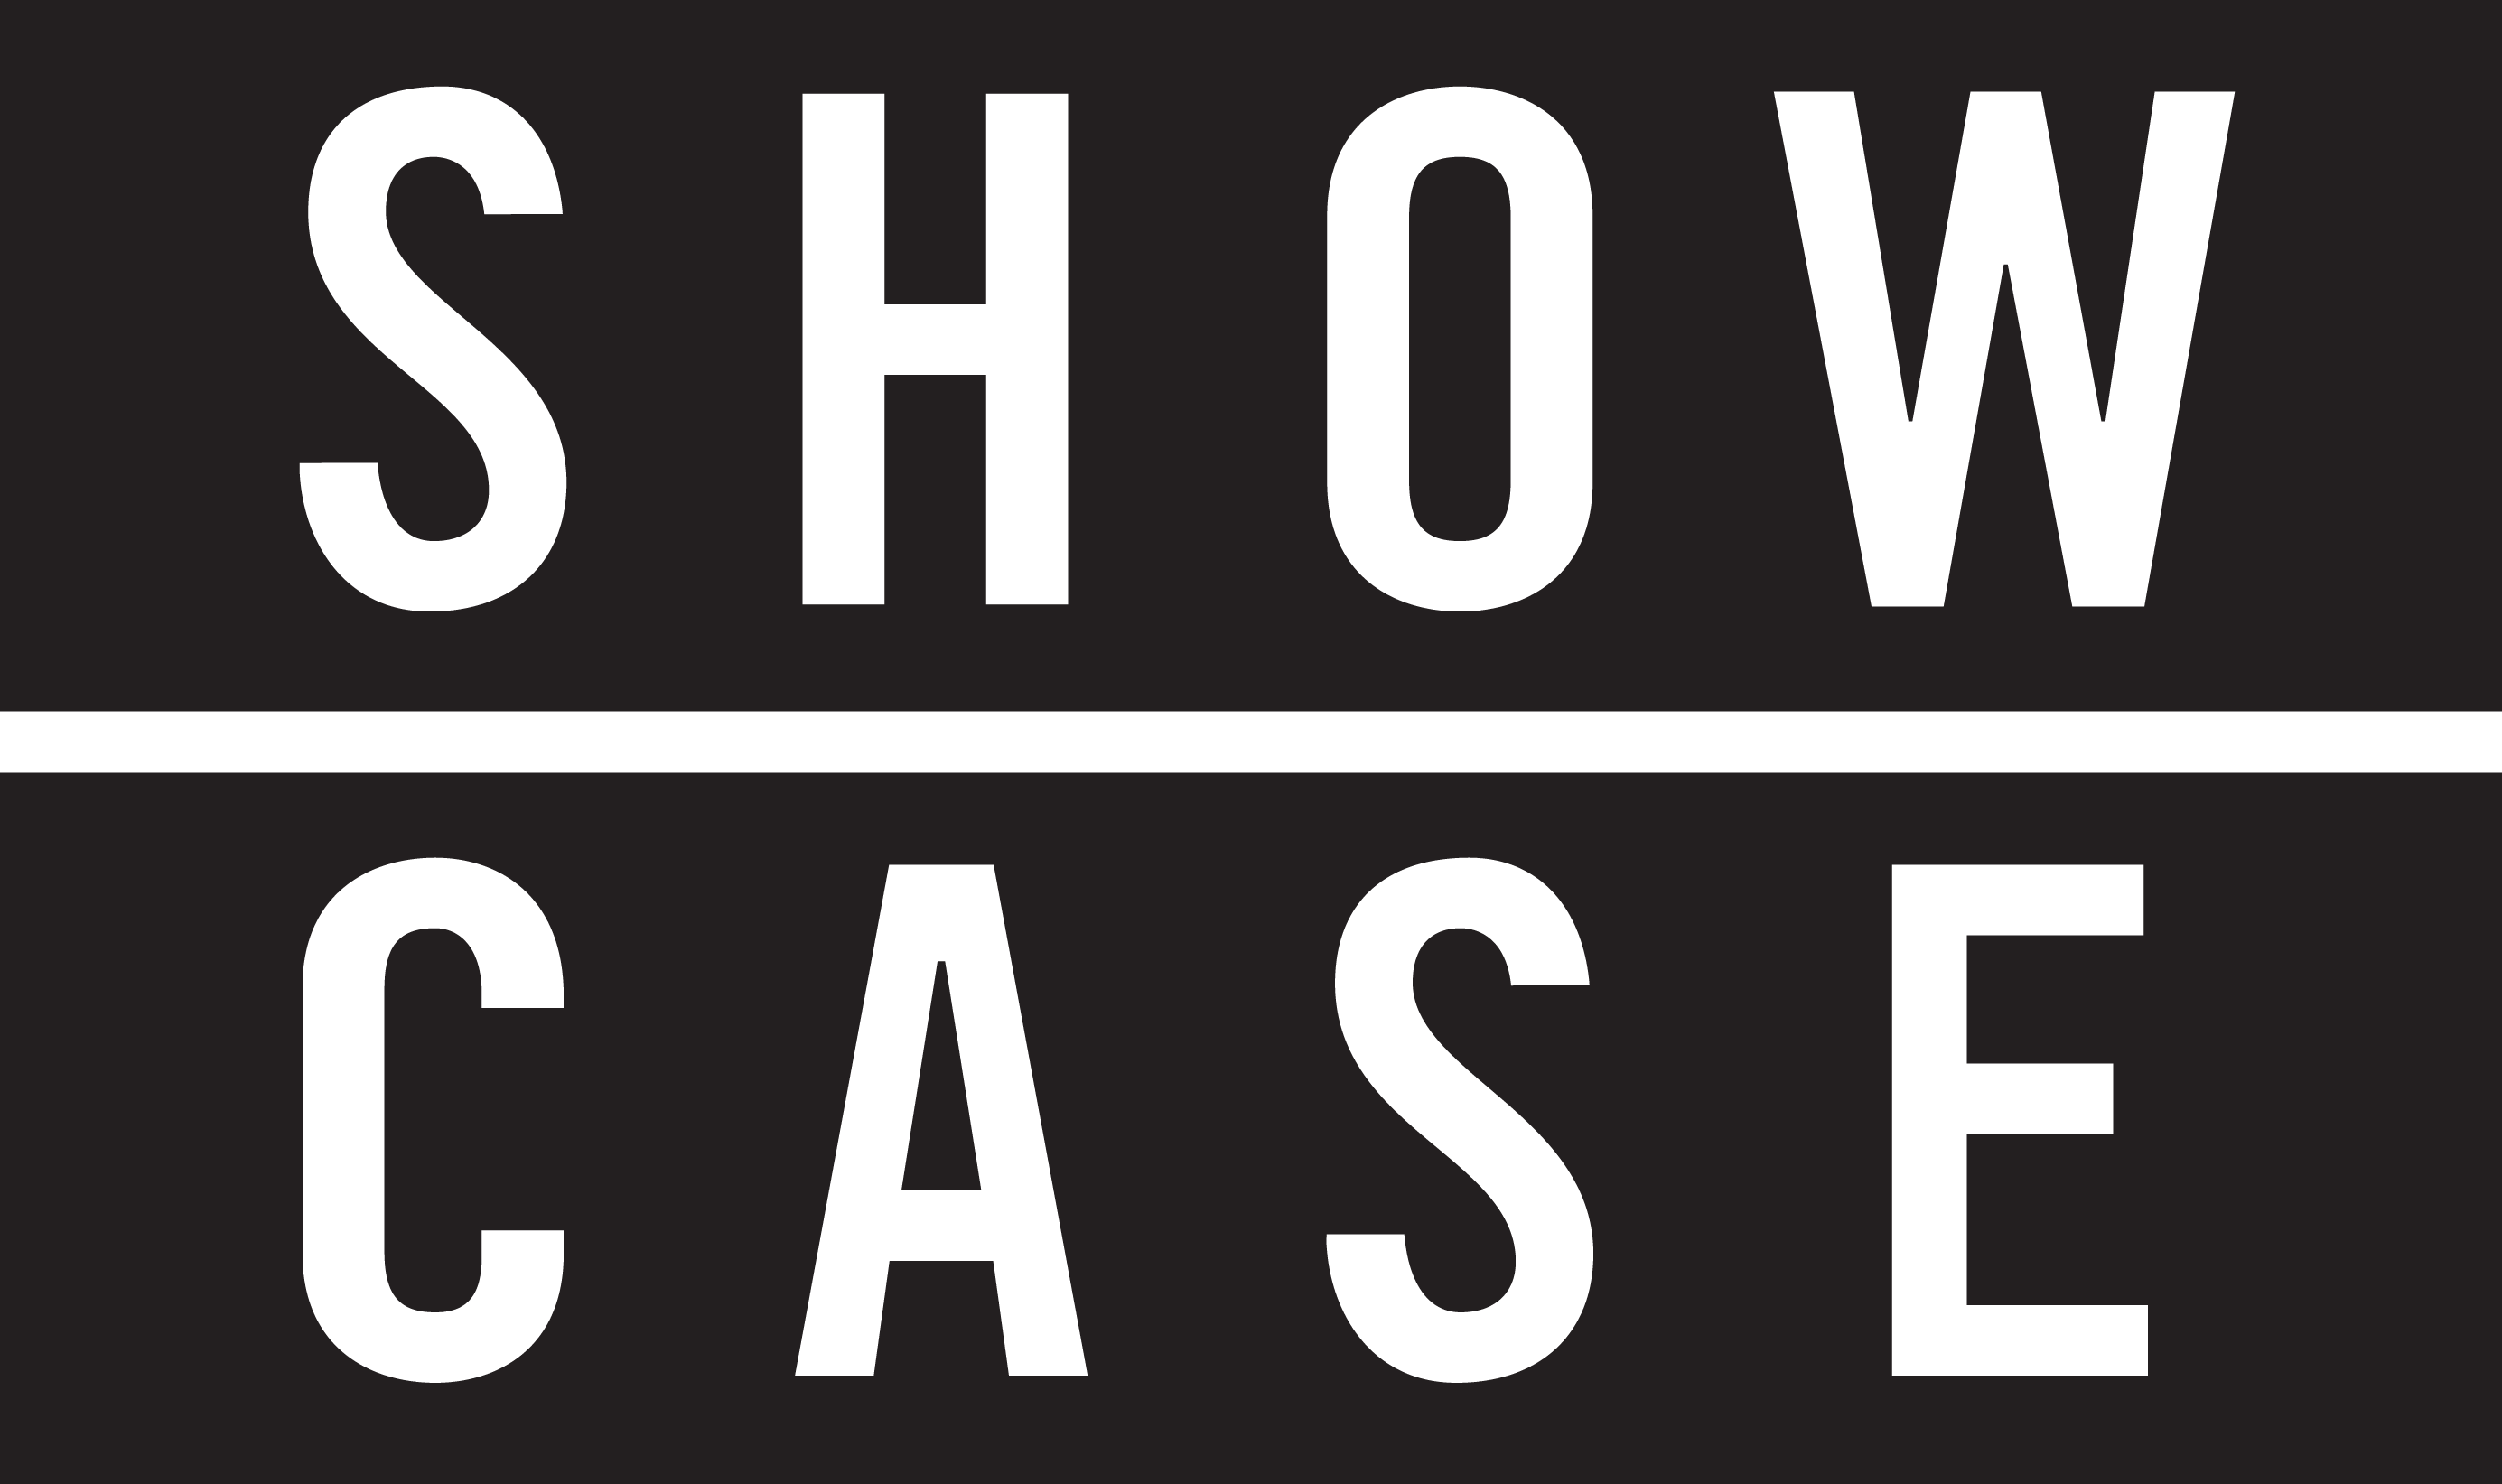 Channel logo for Showcase